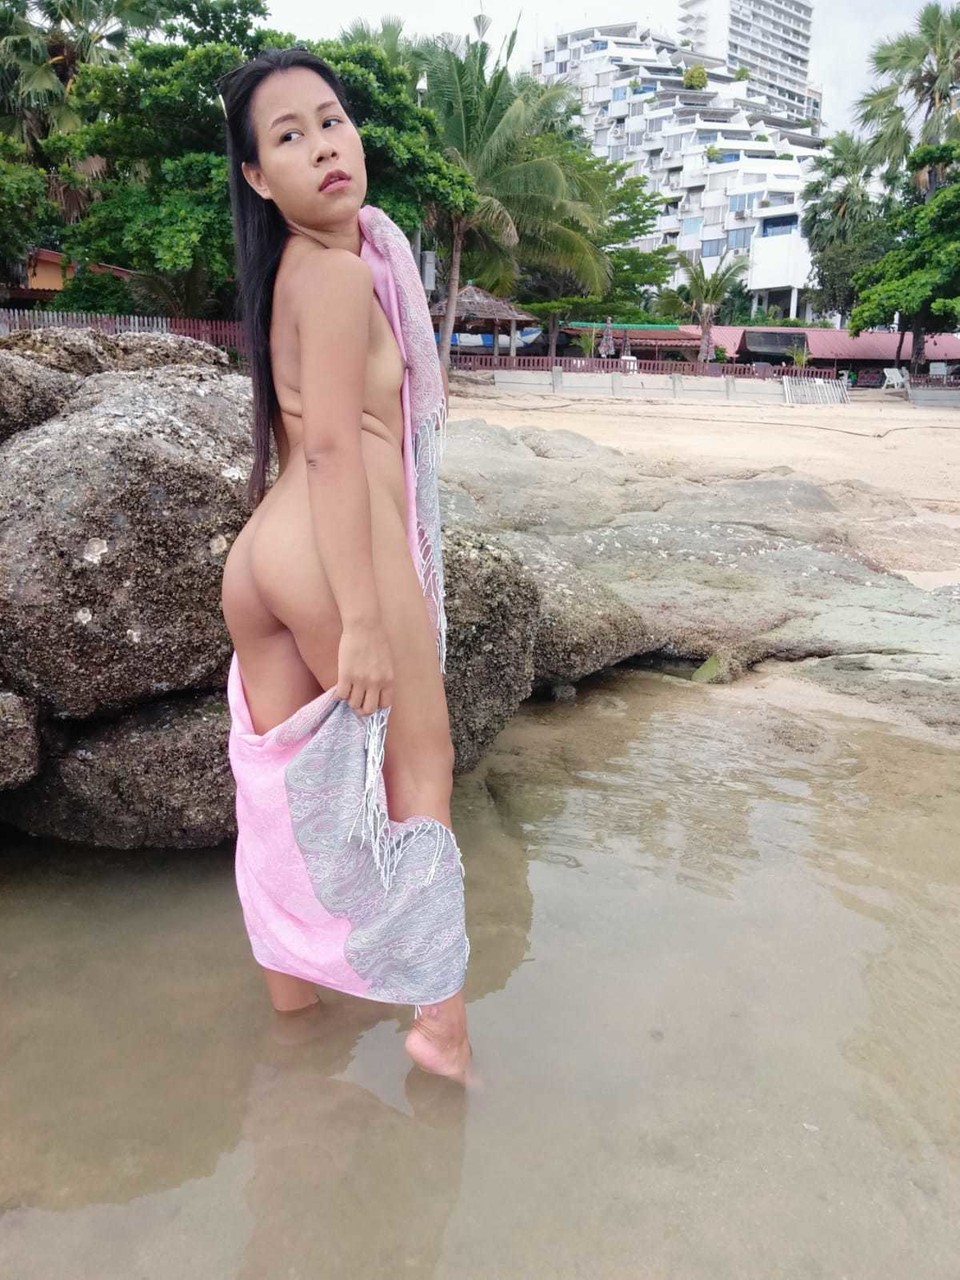 Gorgeous Asian amateur Kiki Asia shows her hot ass in a bikini at the beach photo porno #425545196